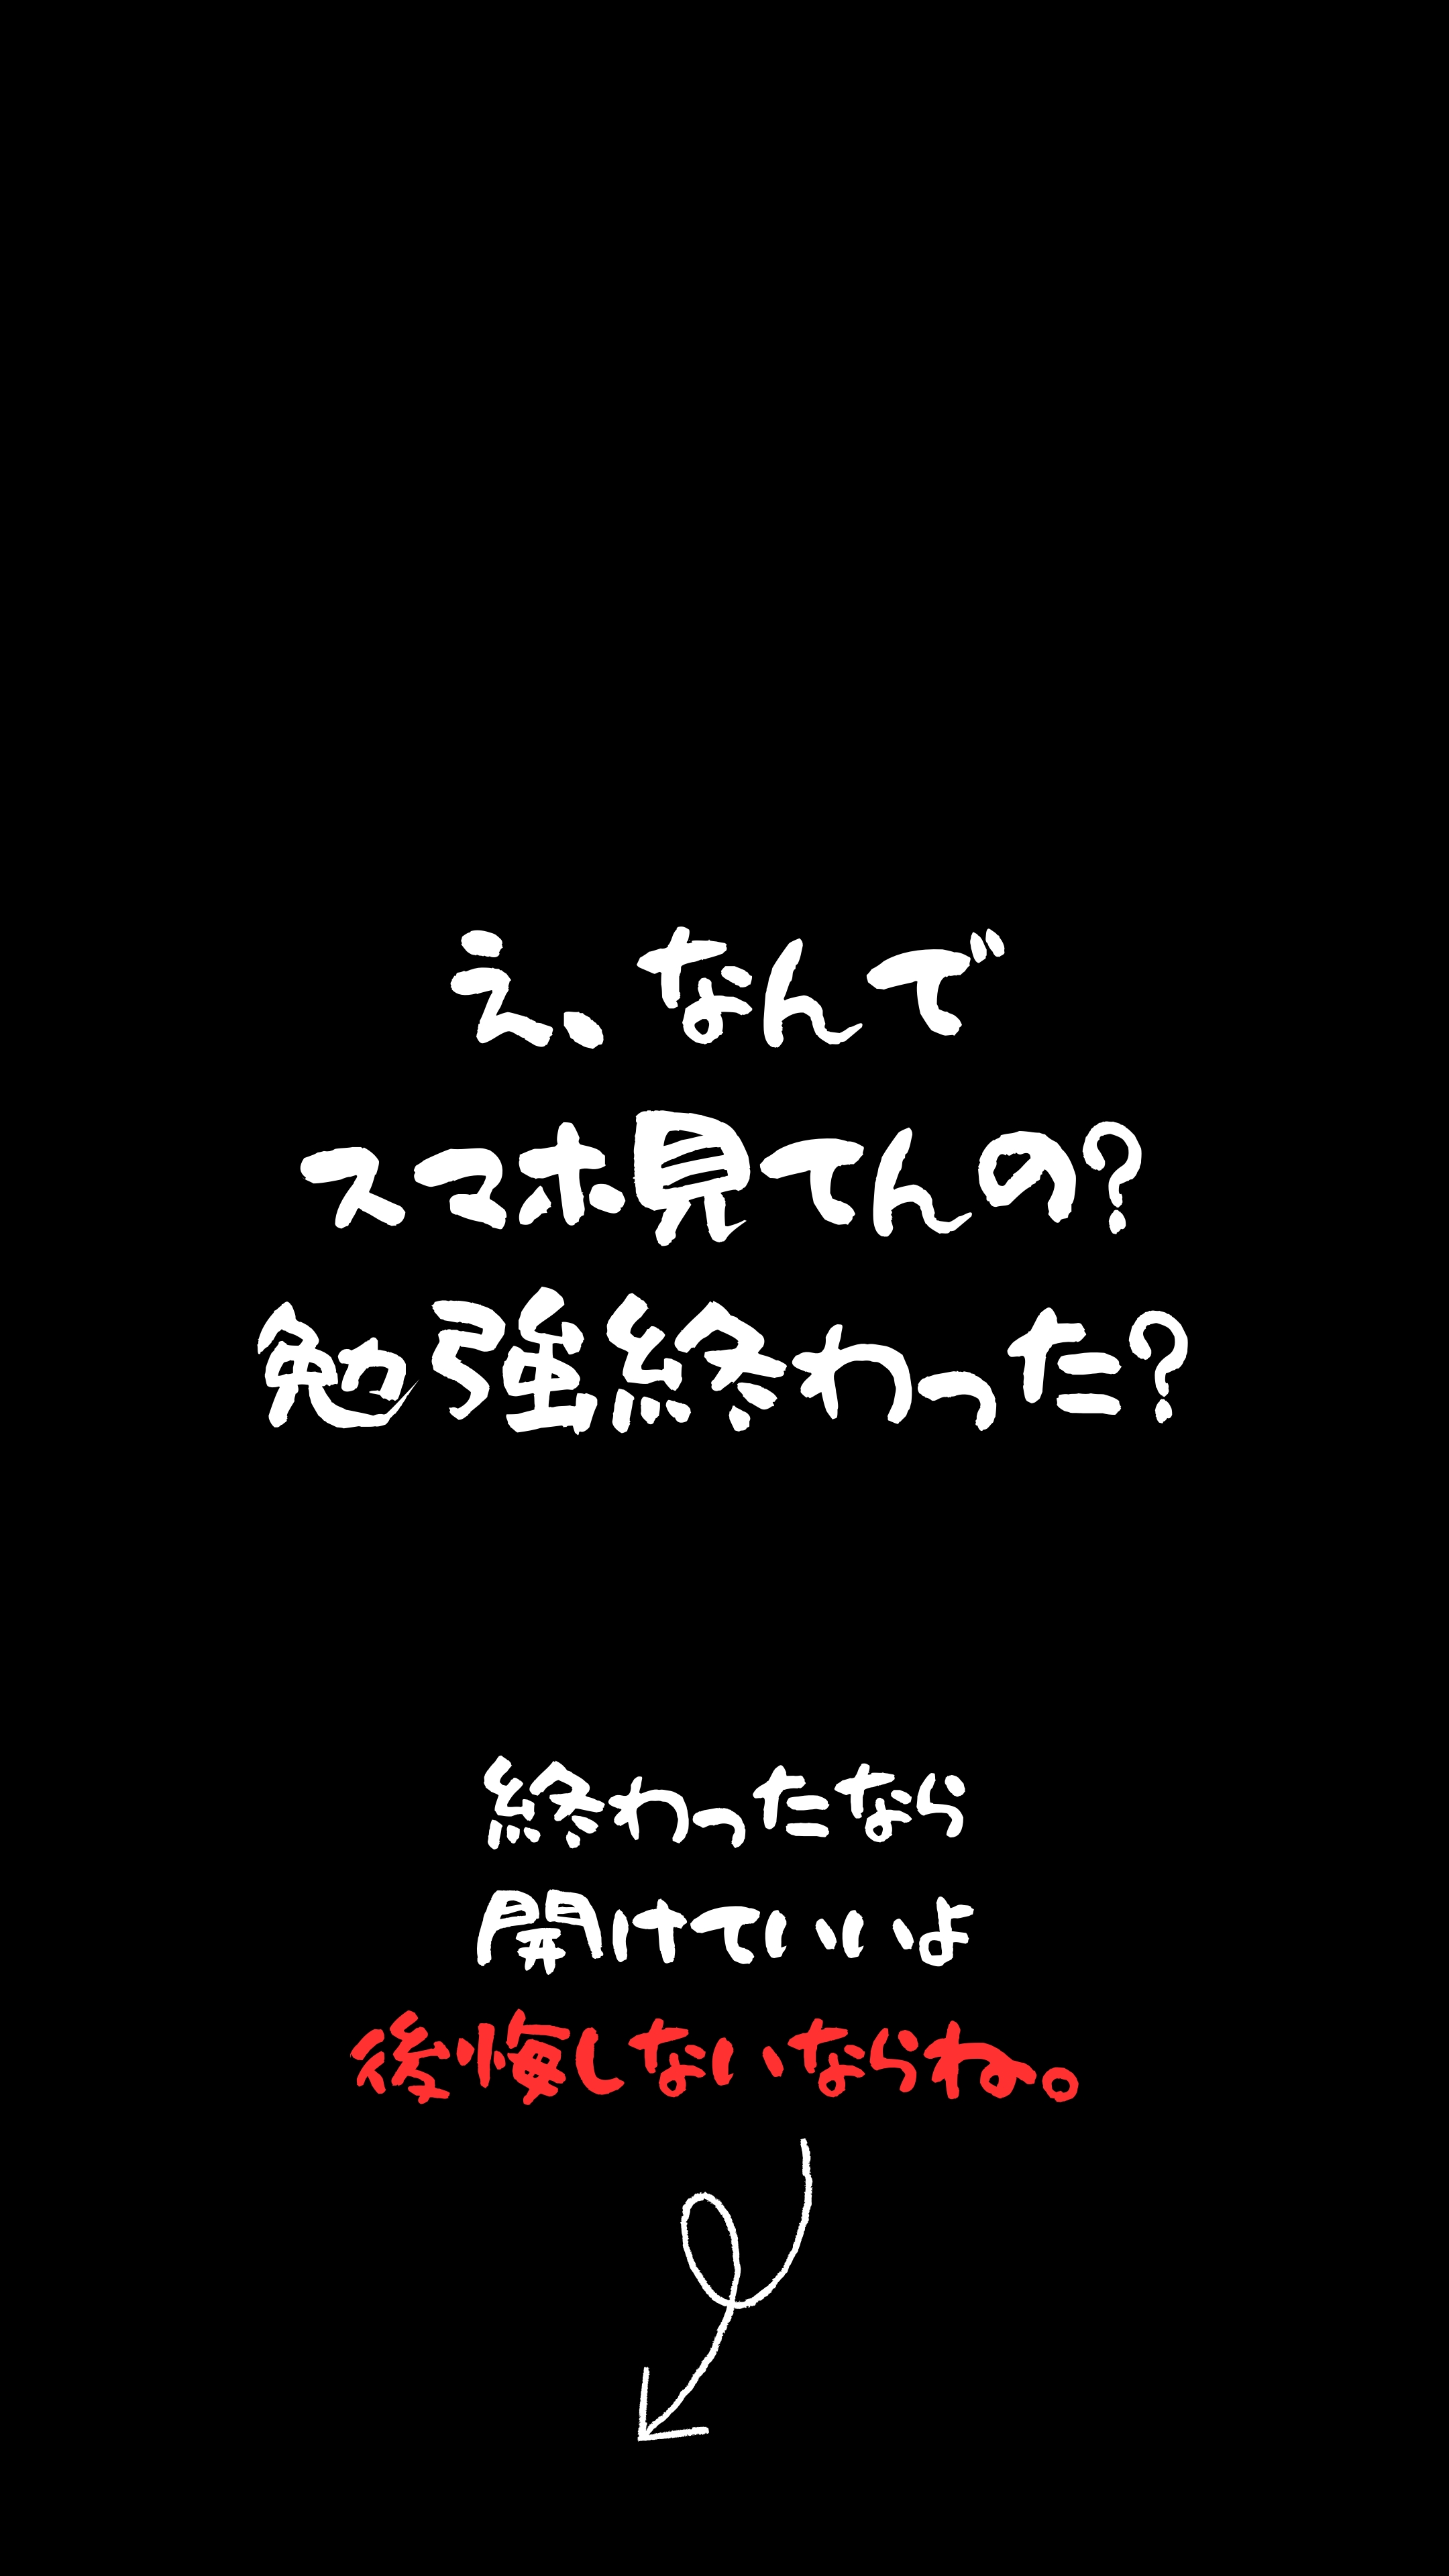 Mysterious Handwritten Japanese Question on Black Tapetai[5ae7481a6d774cc0a166]